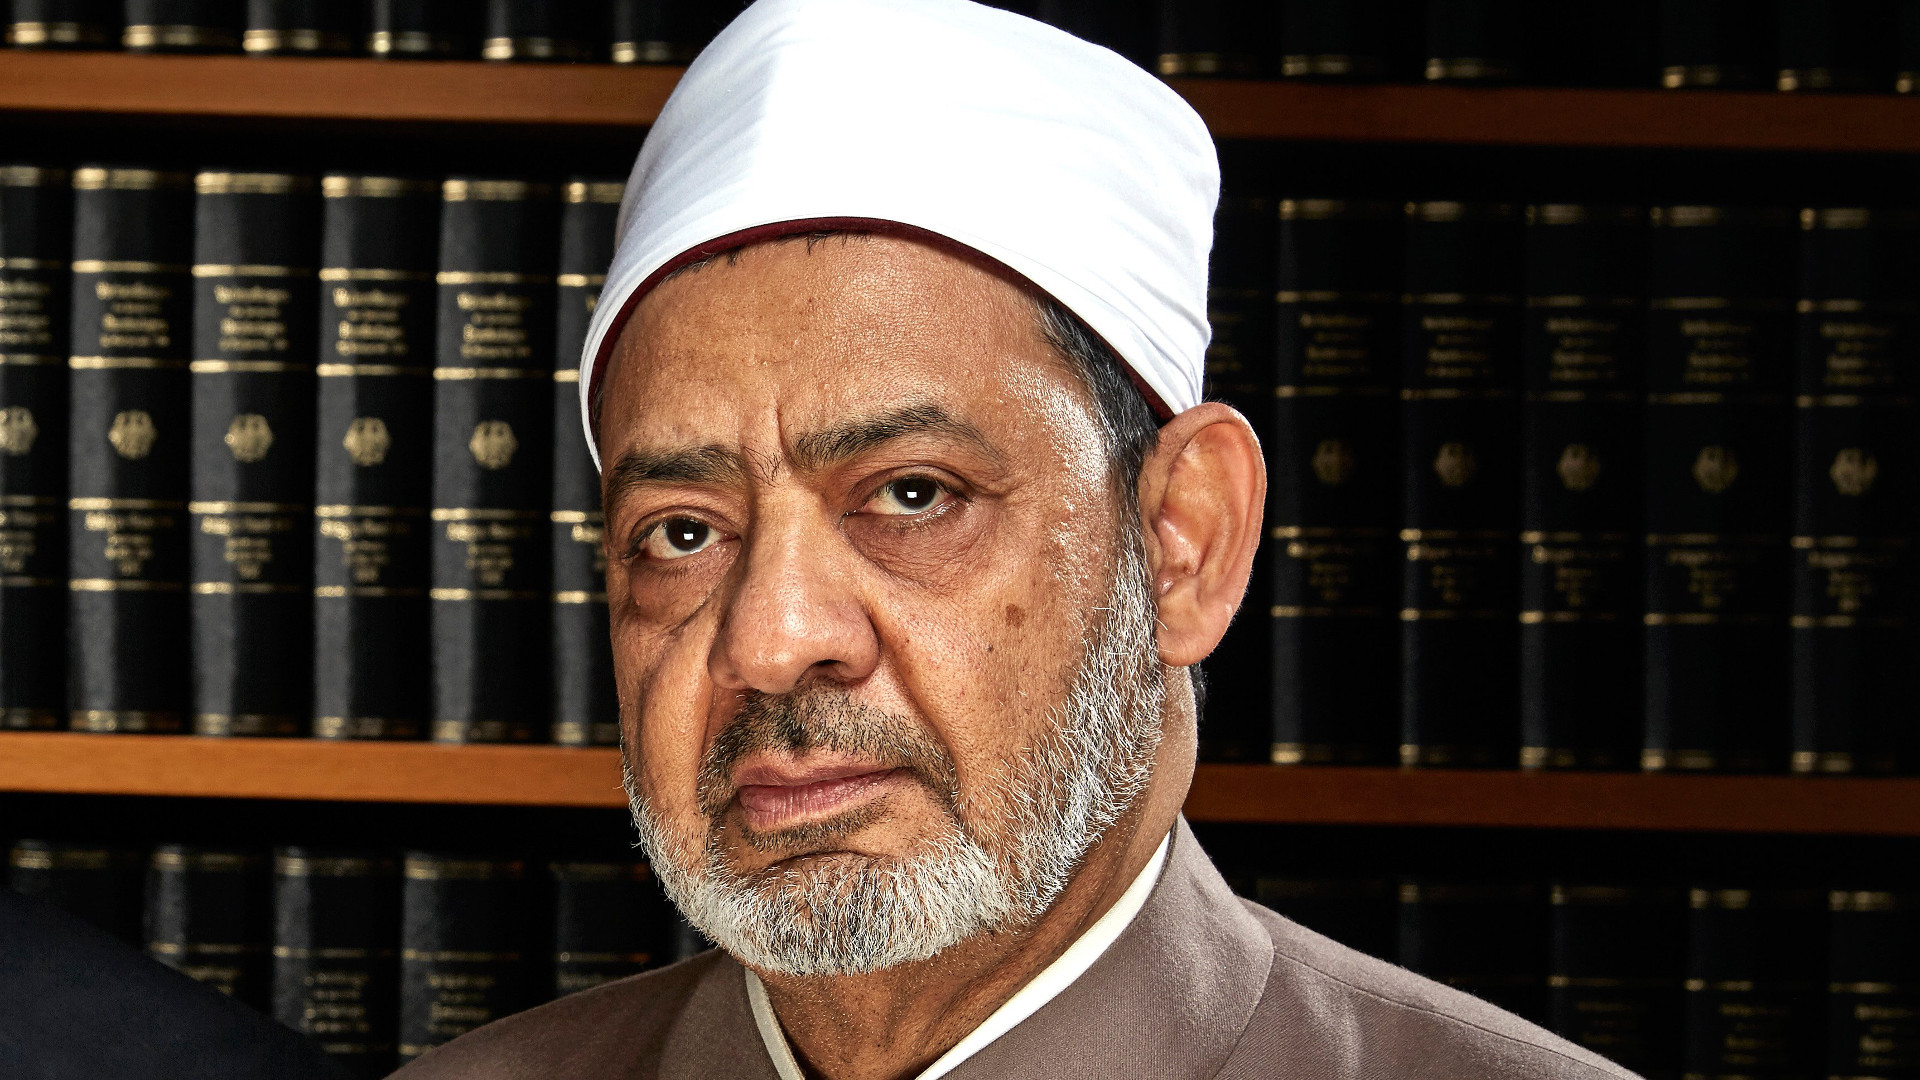 Ahmad al-Tayyib